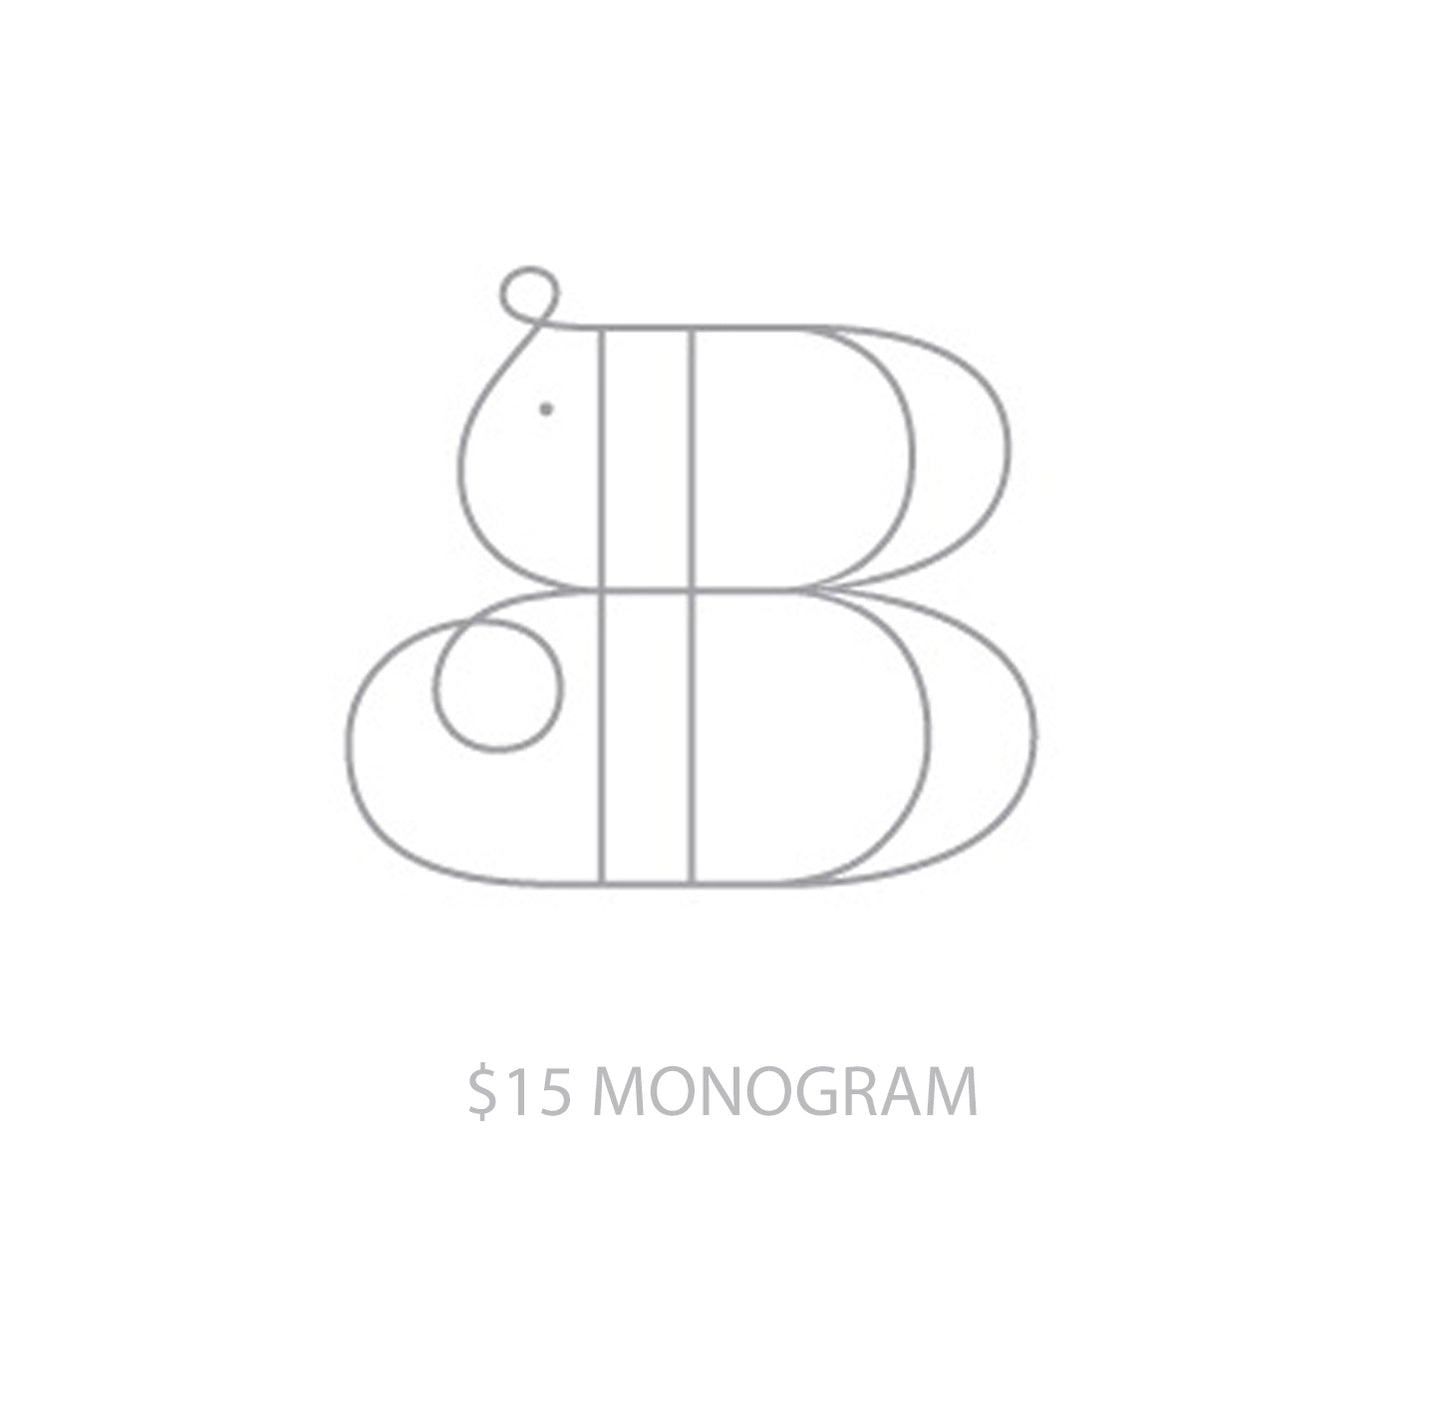 Monogram - $15